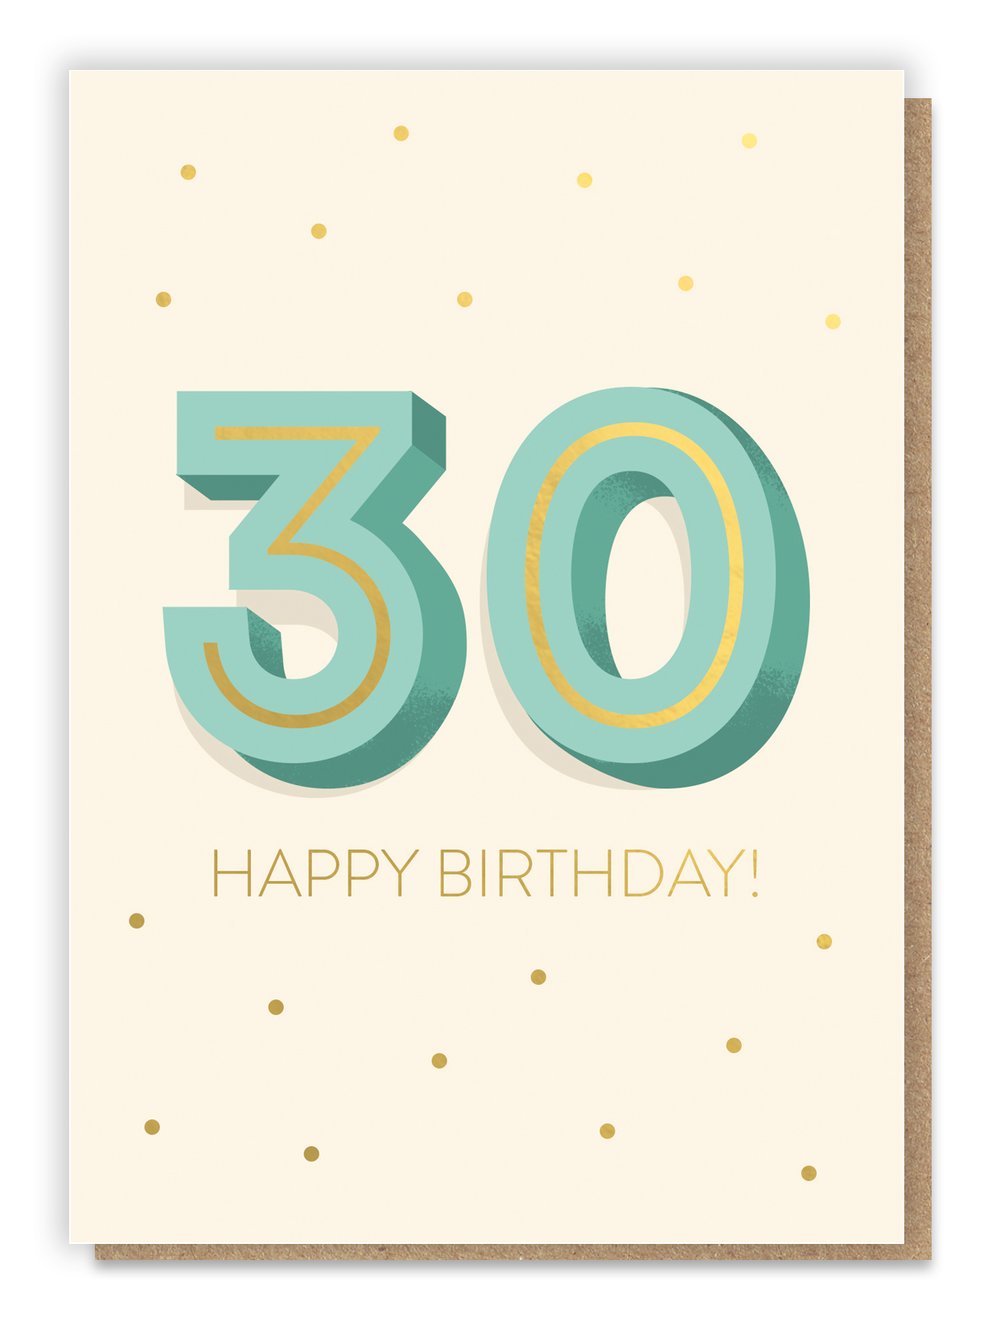 Big 3-0 Birthday Card - Age 30